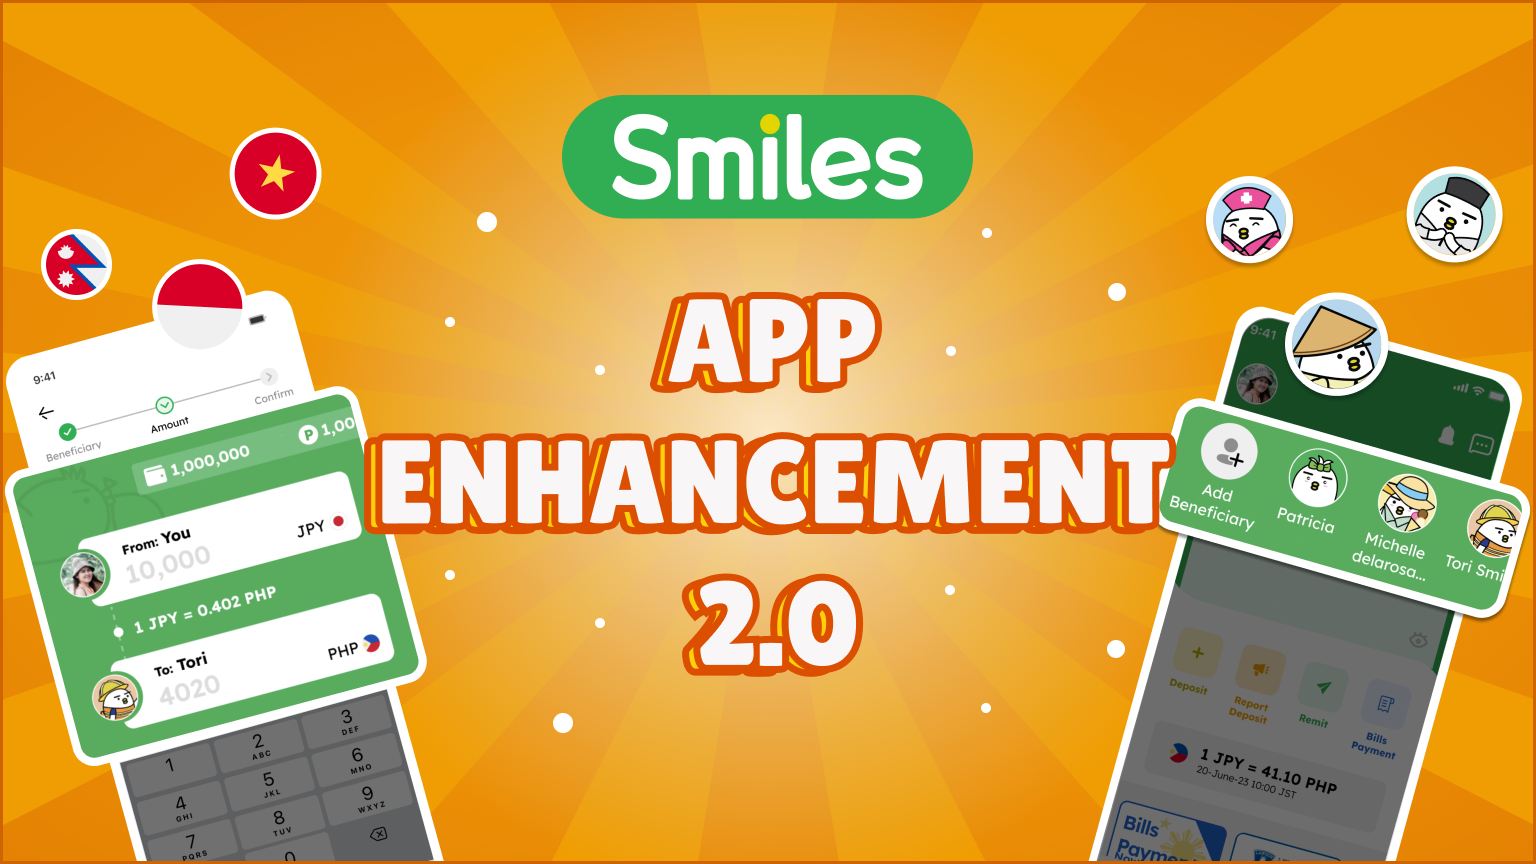 app enhancement smiles 2.0